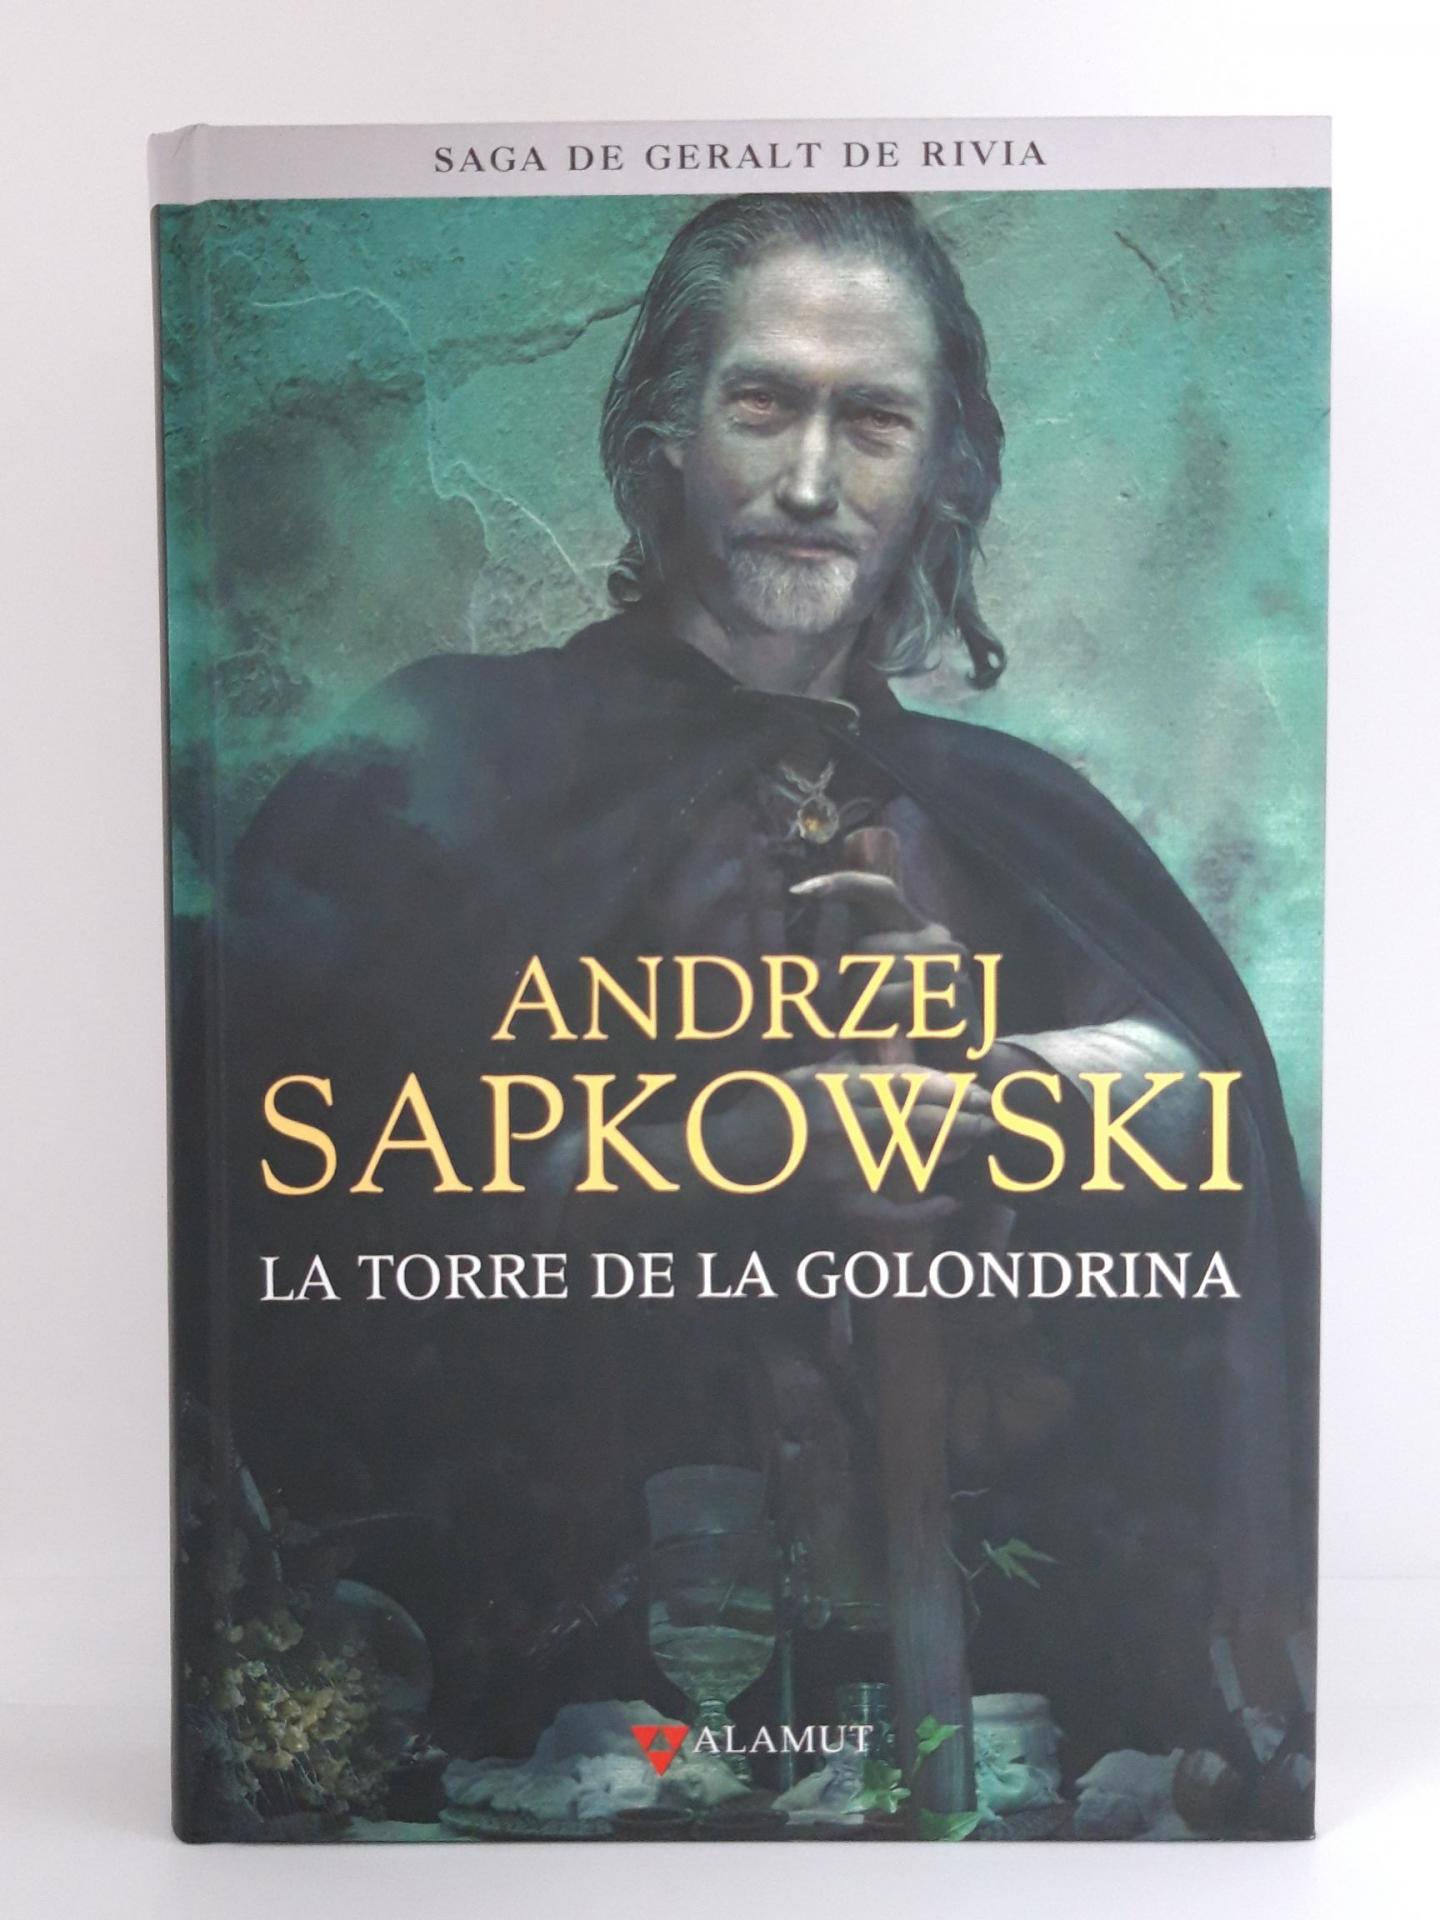 Pack 7 Libros Saga Geralt de Rivia, The Witcher: 140,00 €